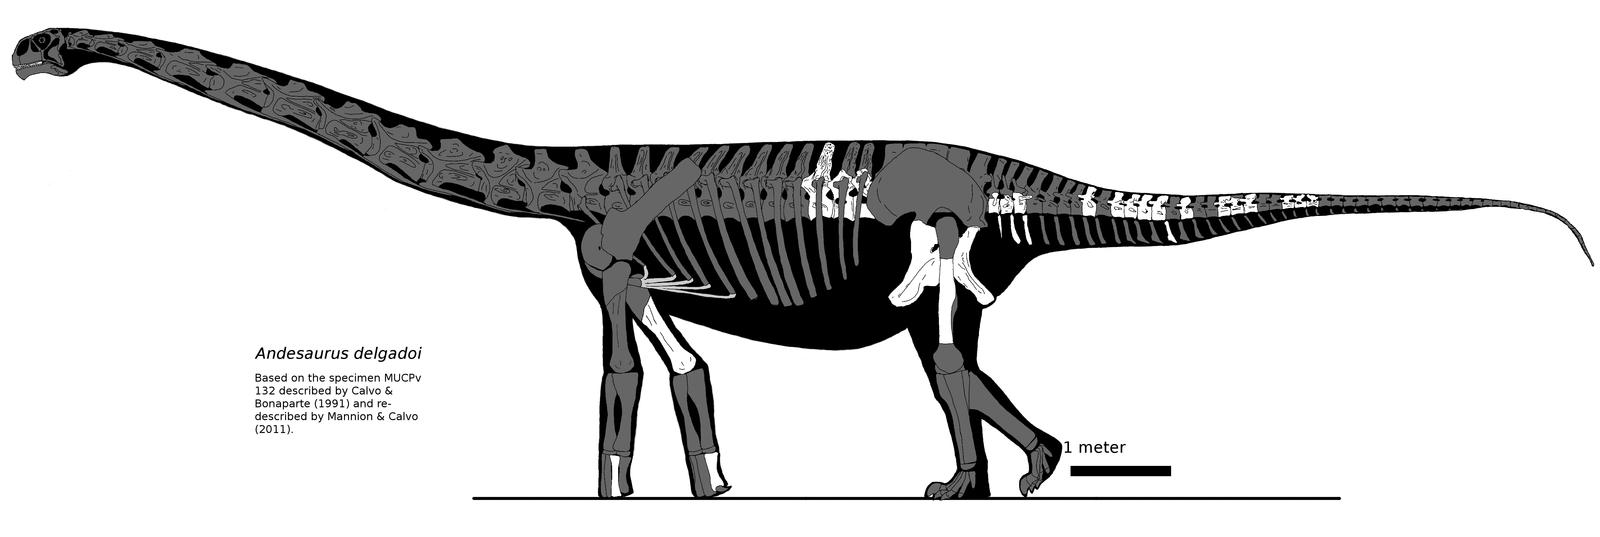 Andesaurus new version